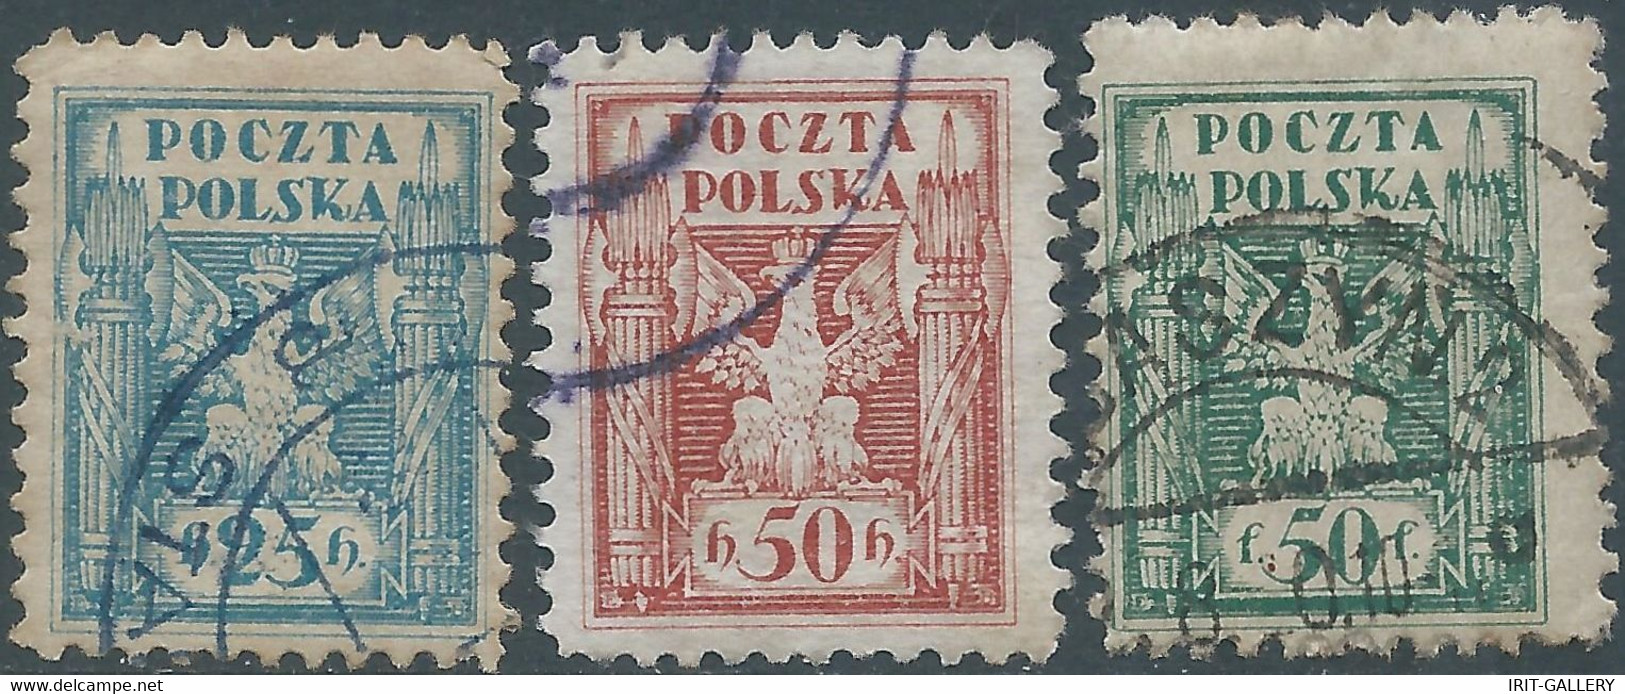 POLONIA-POLAND-POLSKA,1919 South Poland Issues,Obliterated - Gebraucht